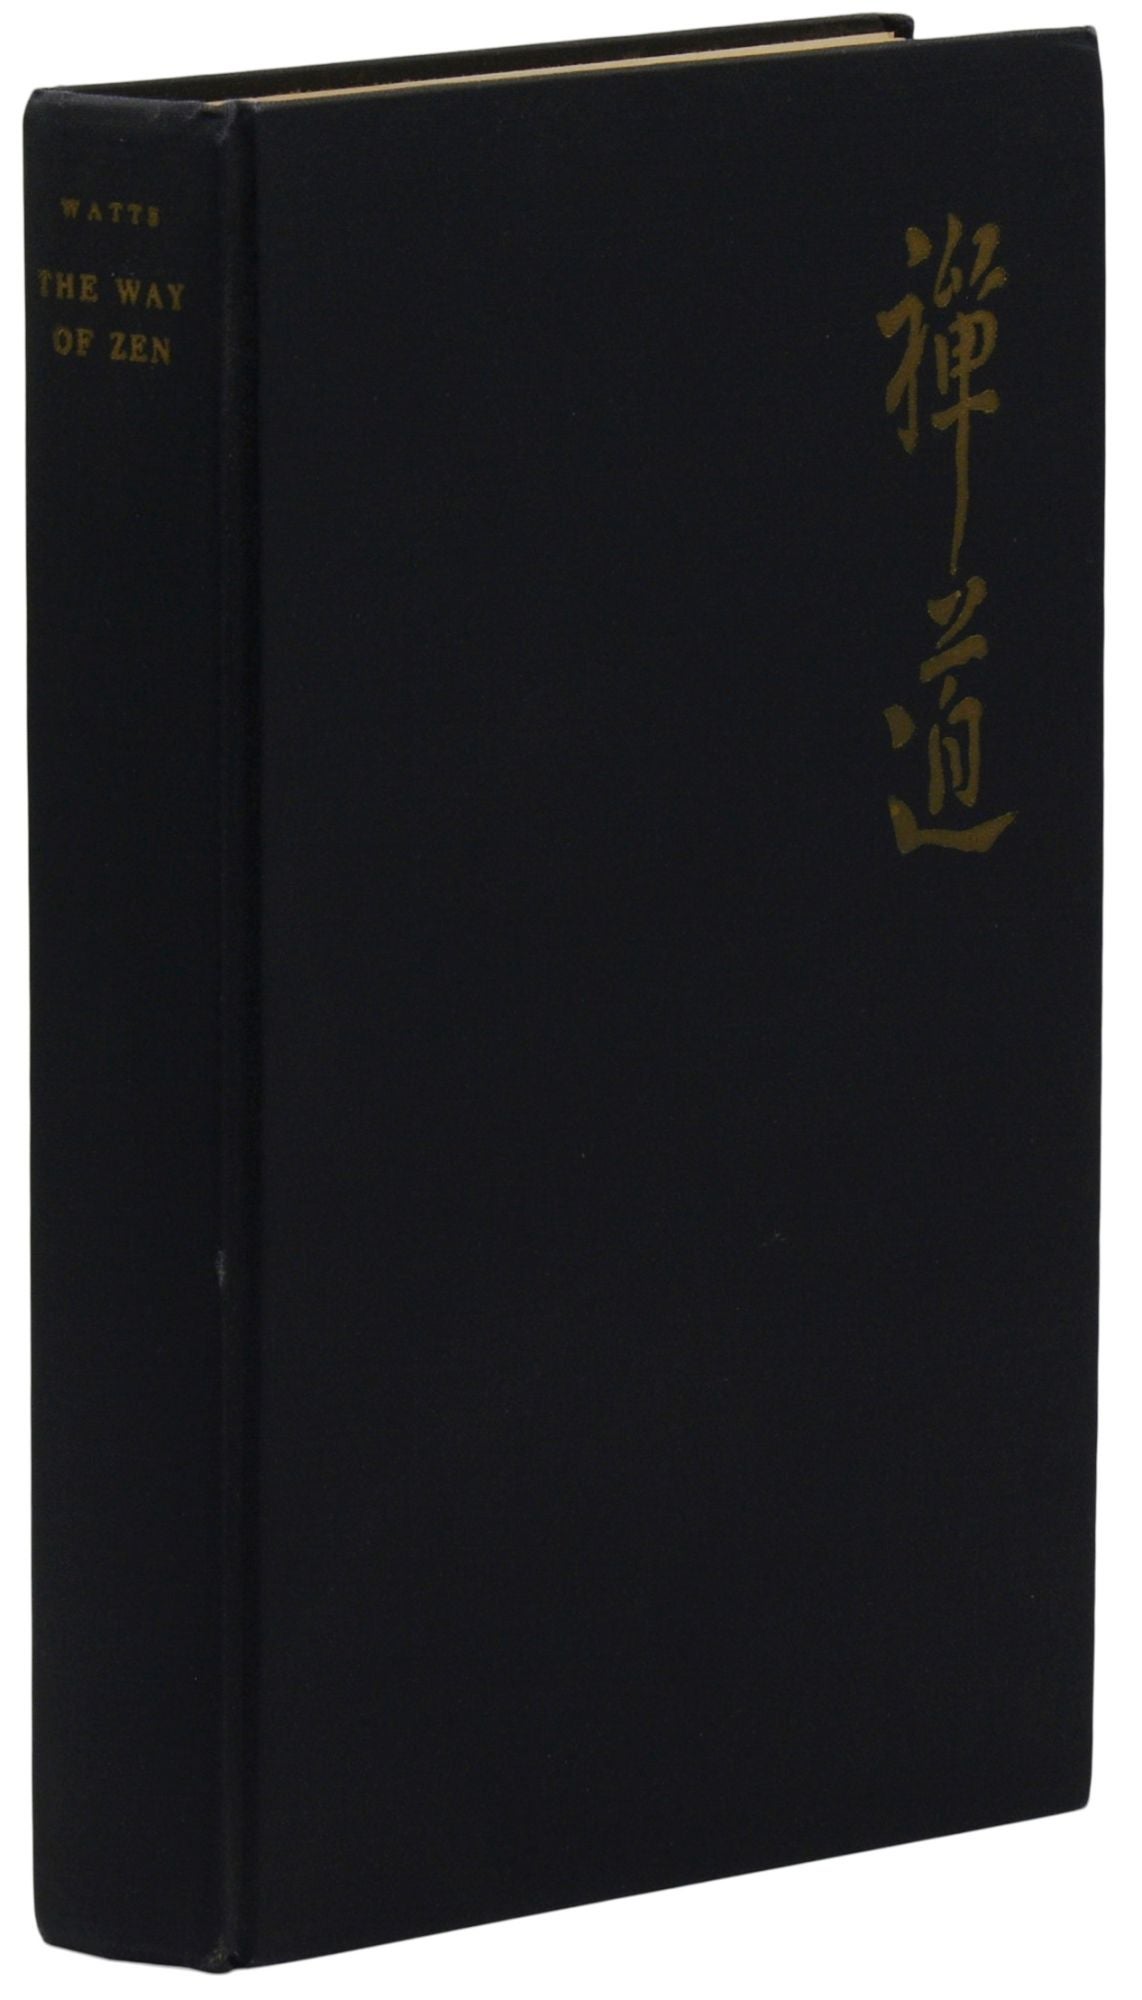 The Way of Zen by Alan W. Watts on Burnside Rare Books